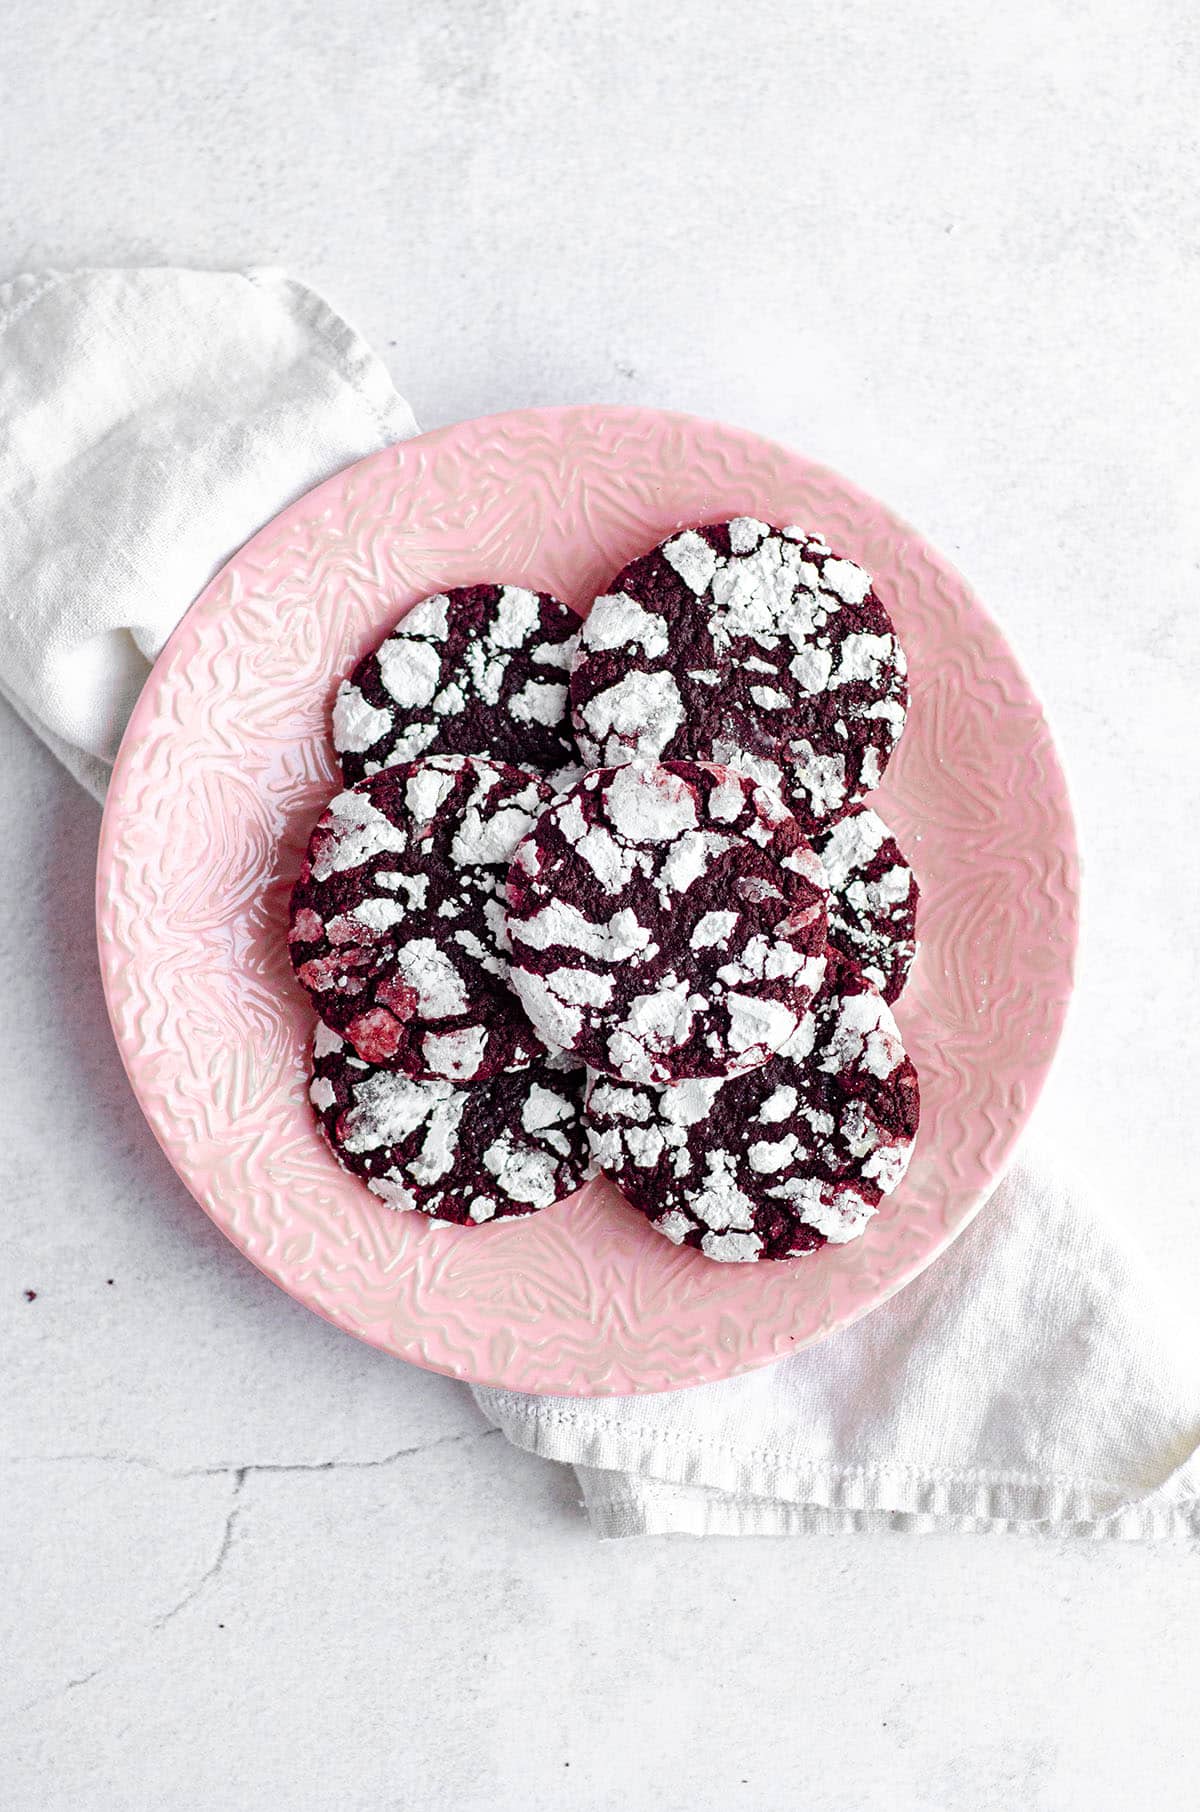 red velvet crinkle cookies on a pink plate